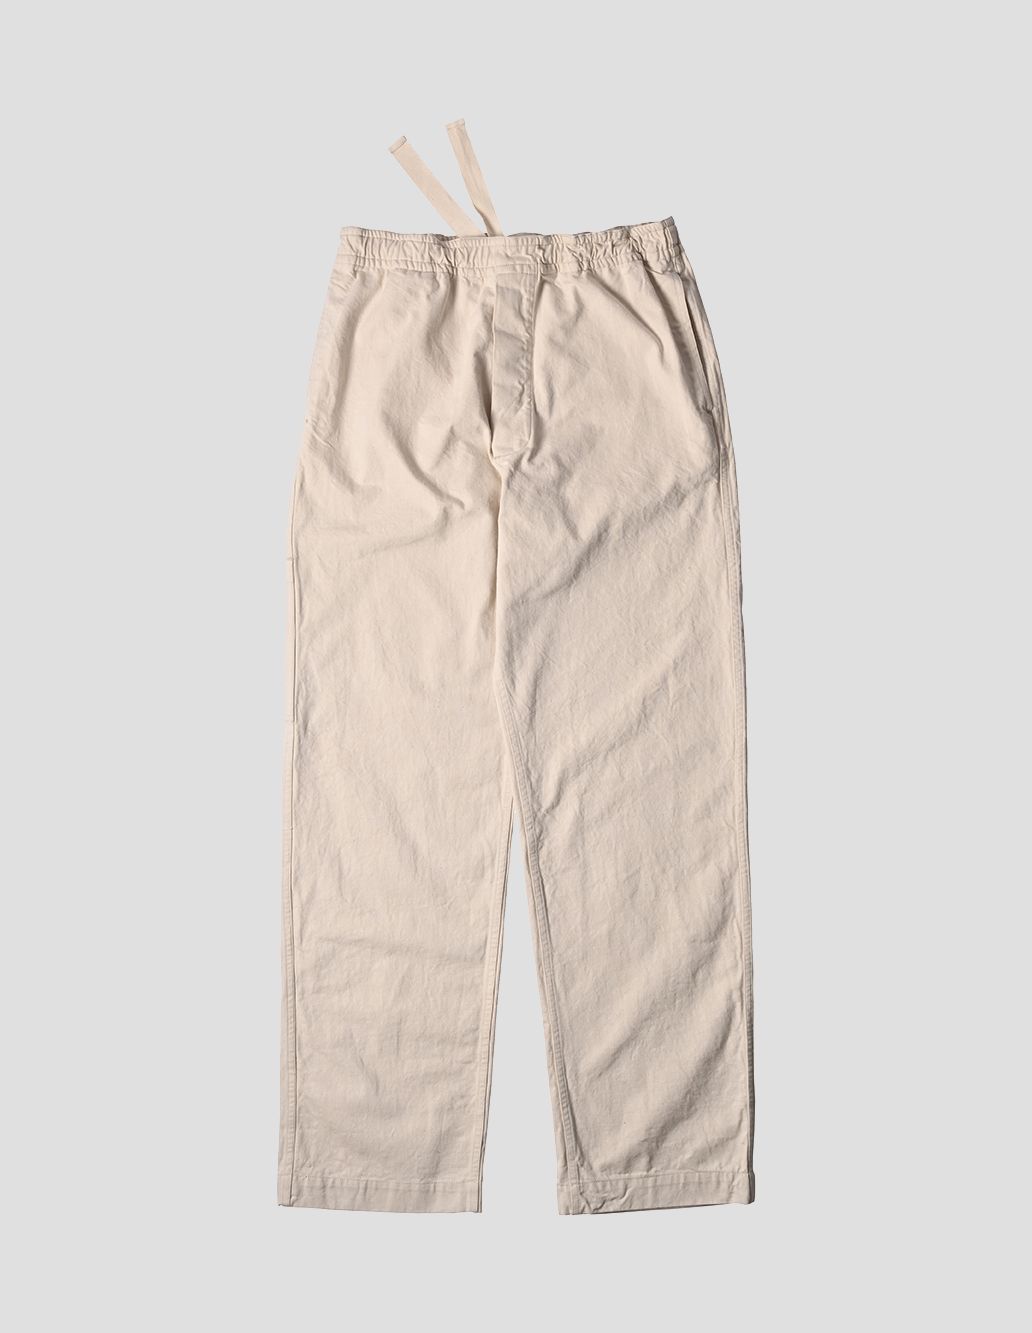 Comfortable Pants for Men  lululemon